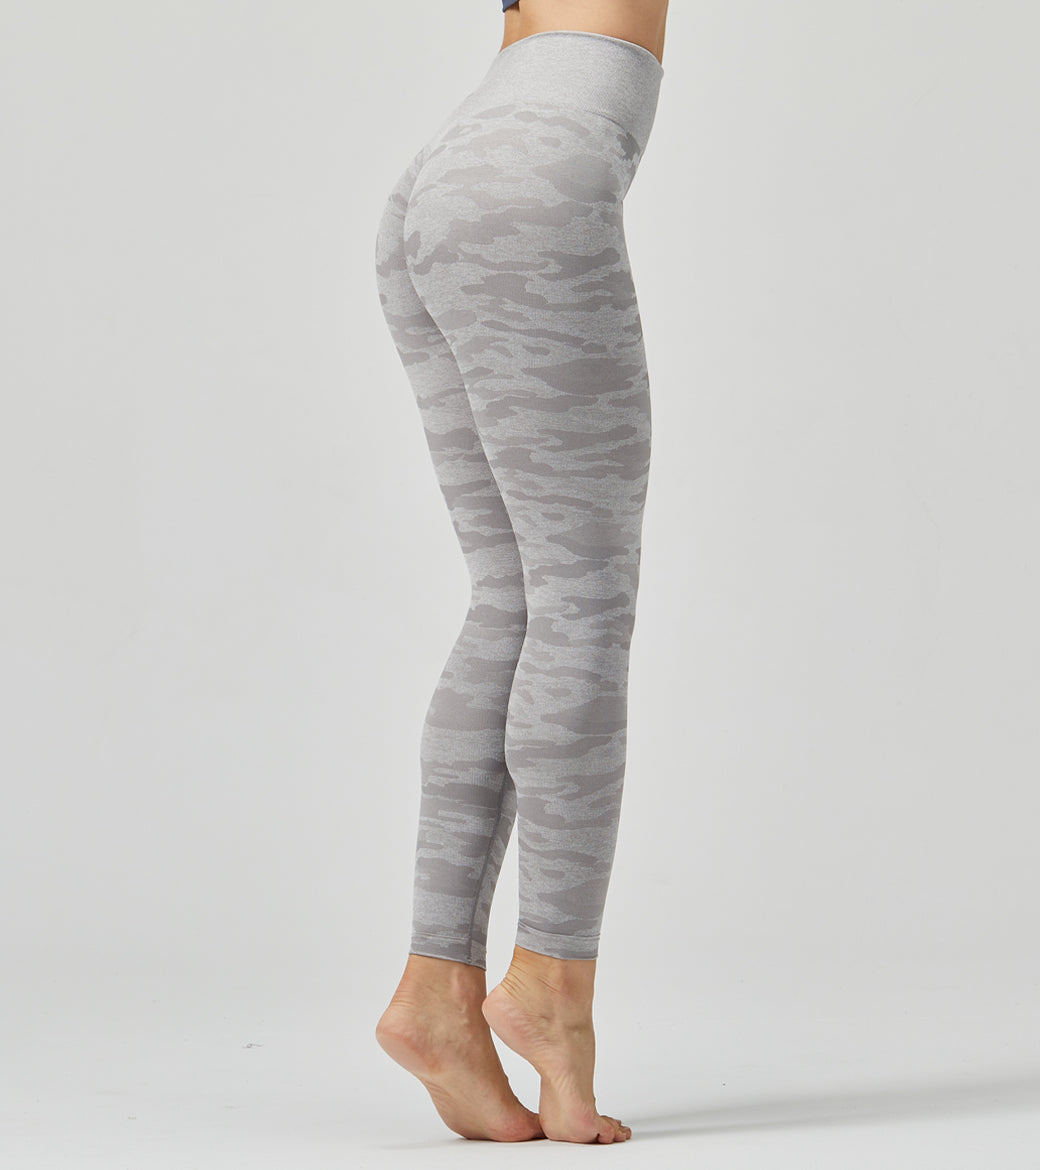 LOVESOFT Women's Light Grey Camo Seamless Leggings High Waist Hip-lifting Pants